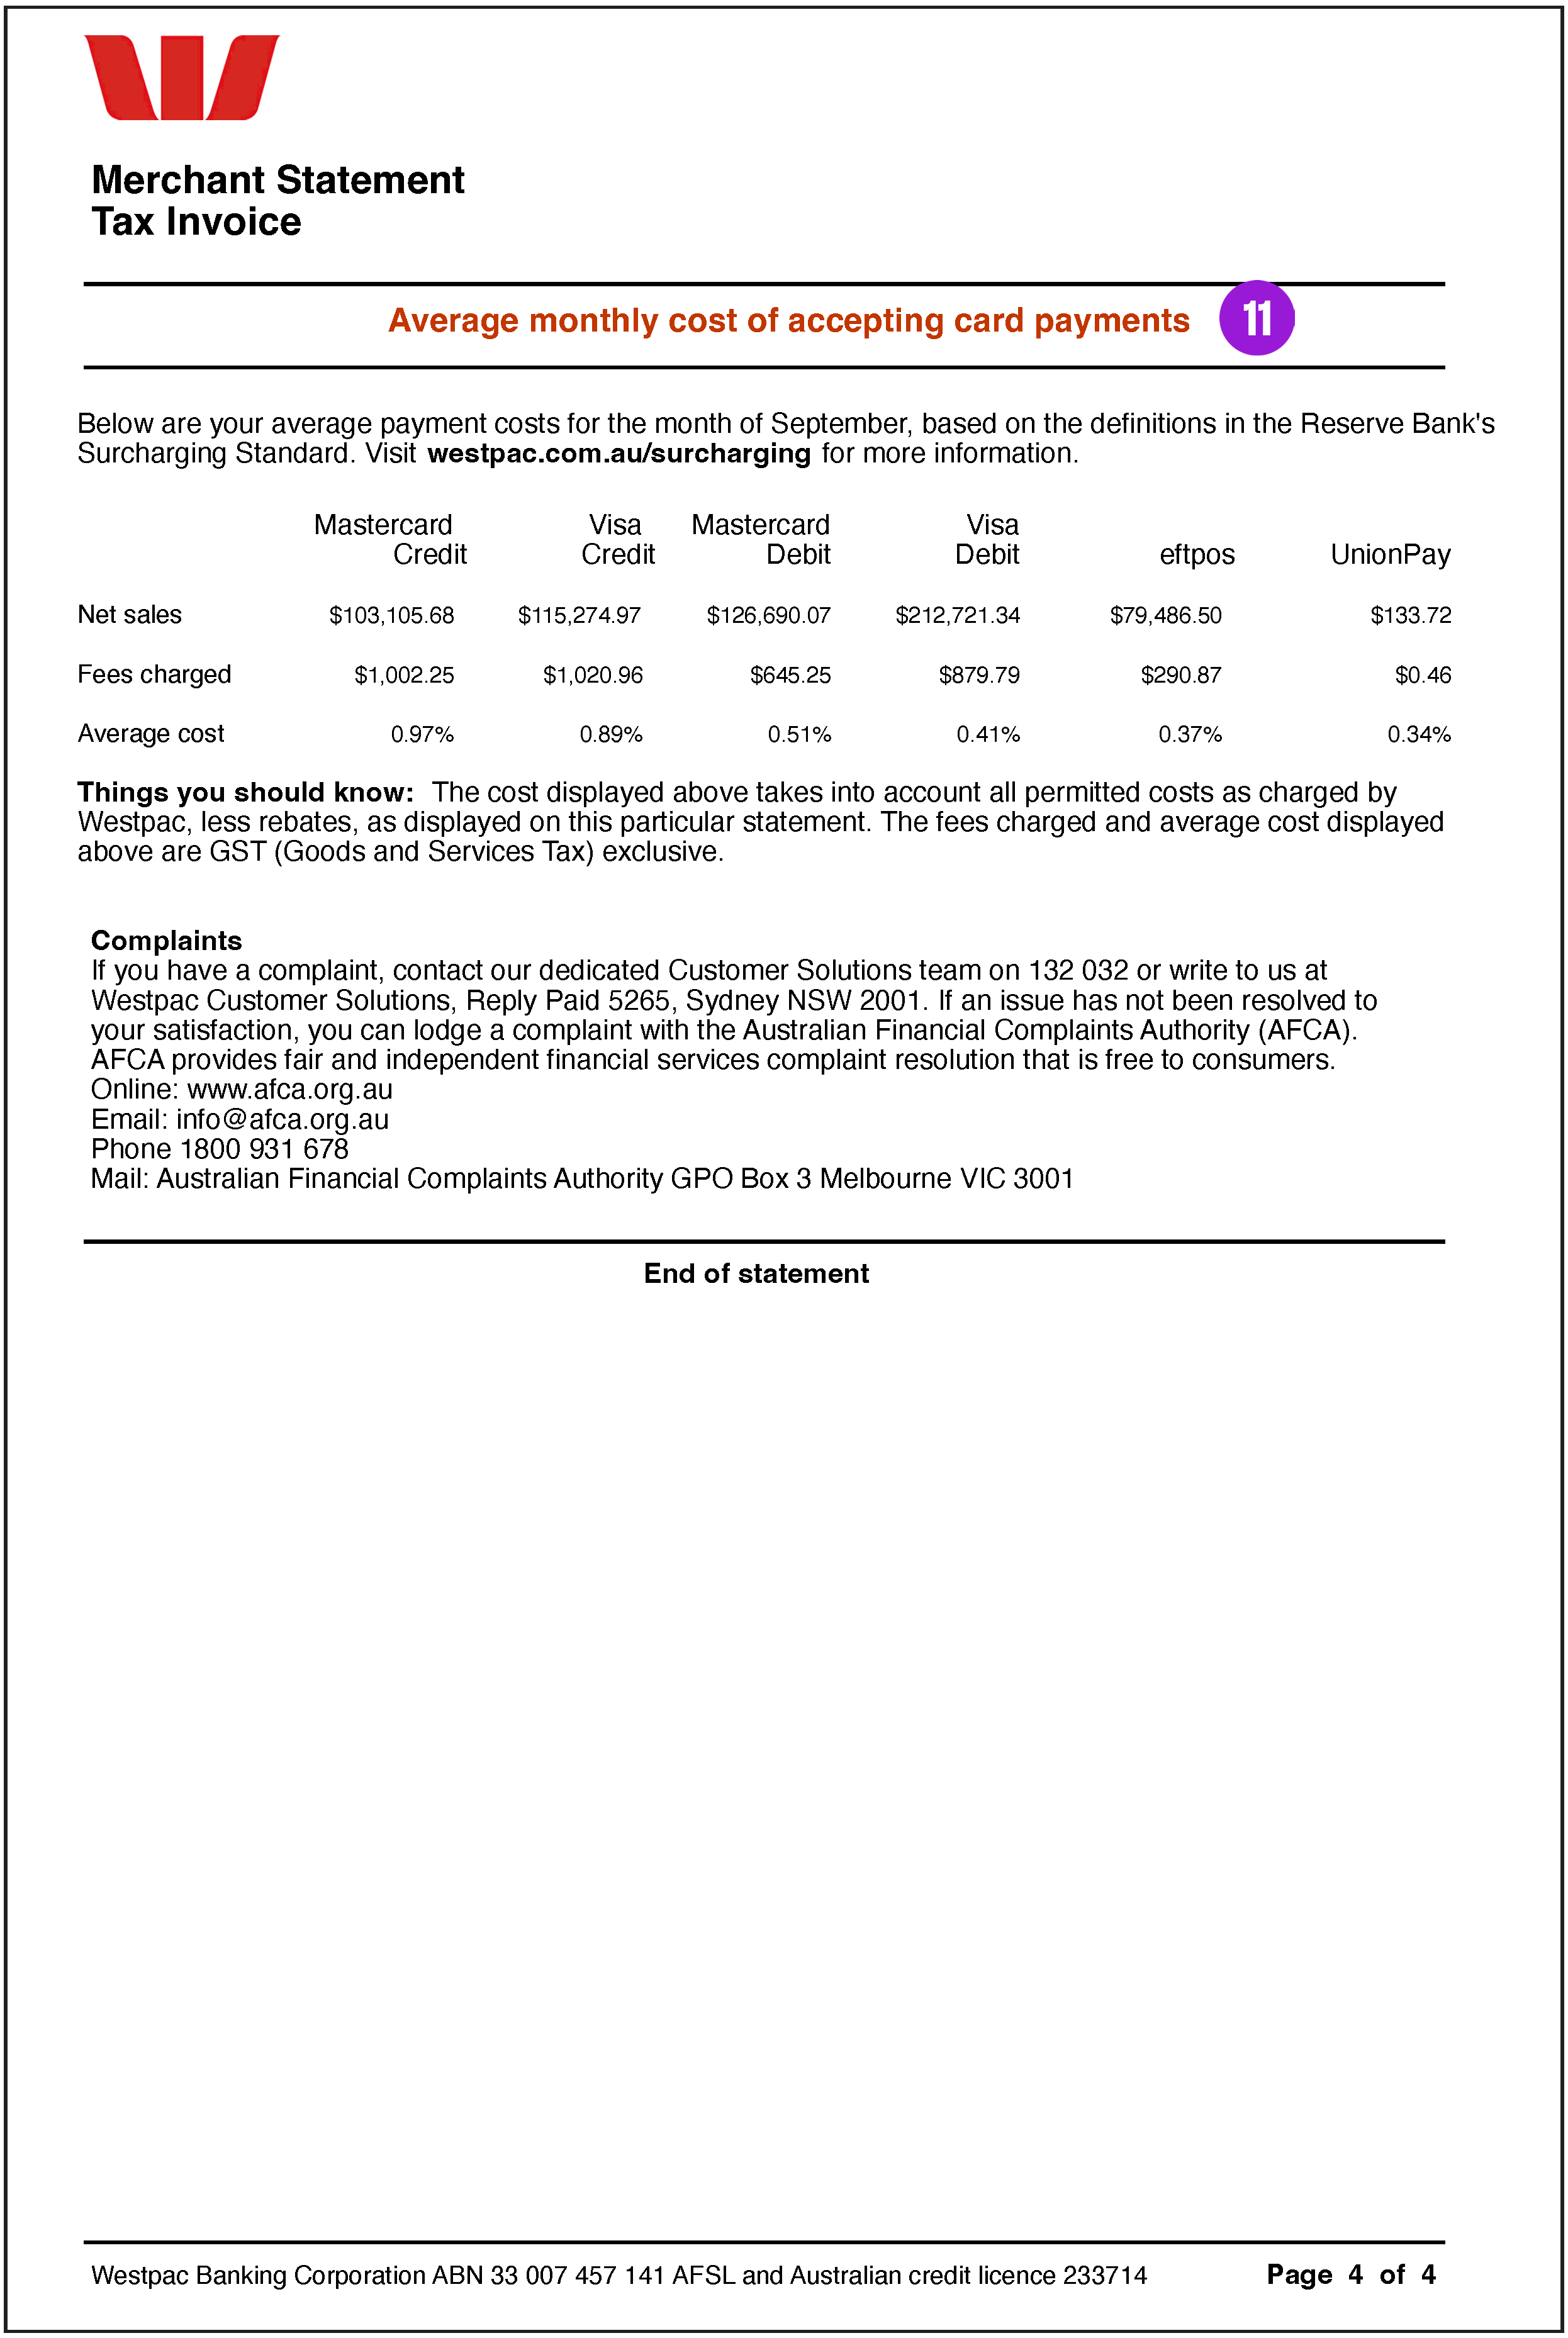 Sample merchant statement tax invoice page 3